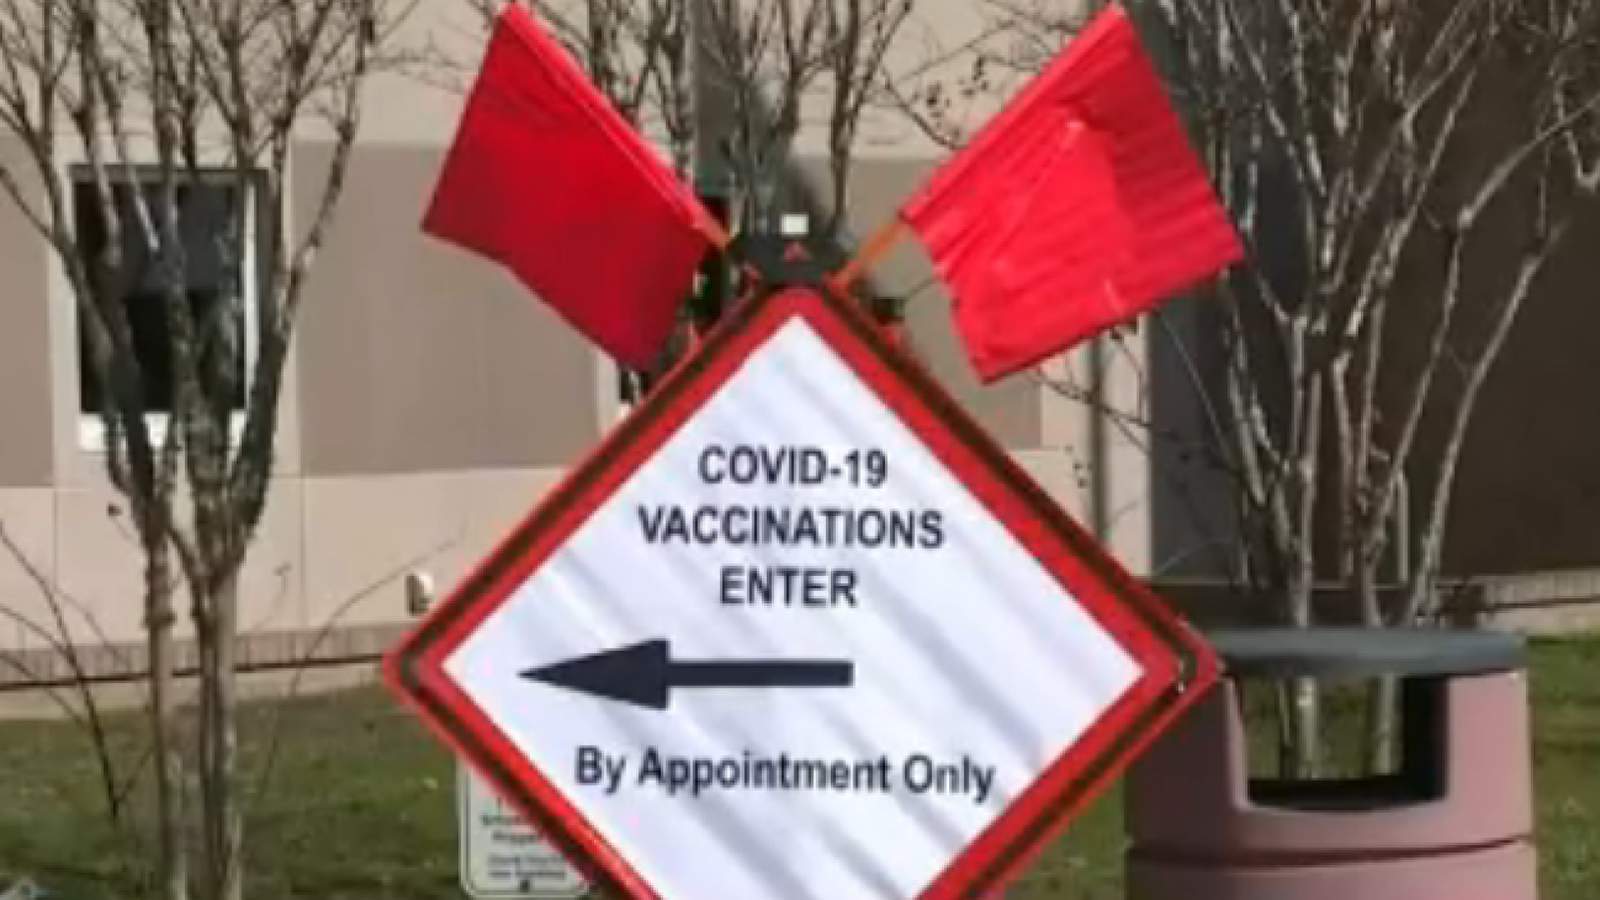 Health officials to open vaccination hubs across Texas